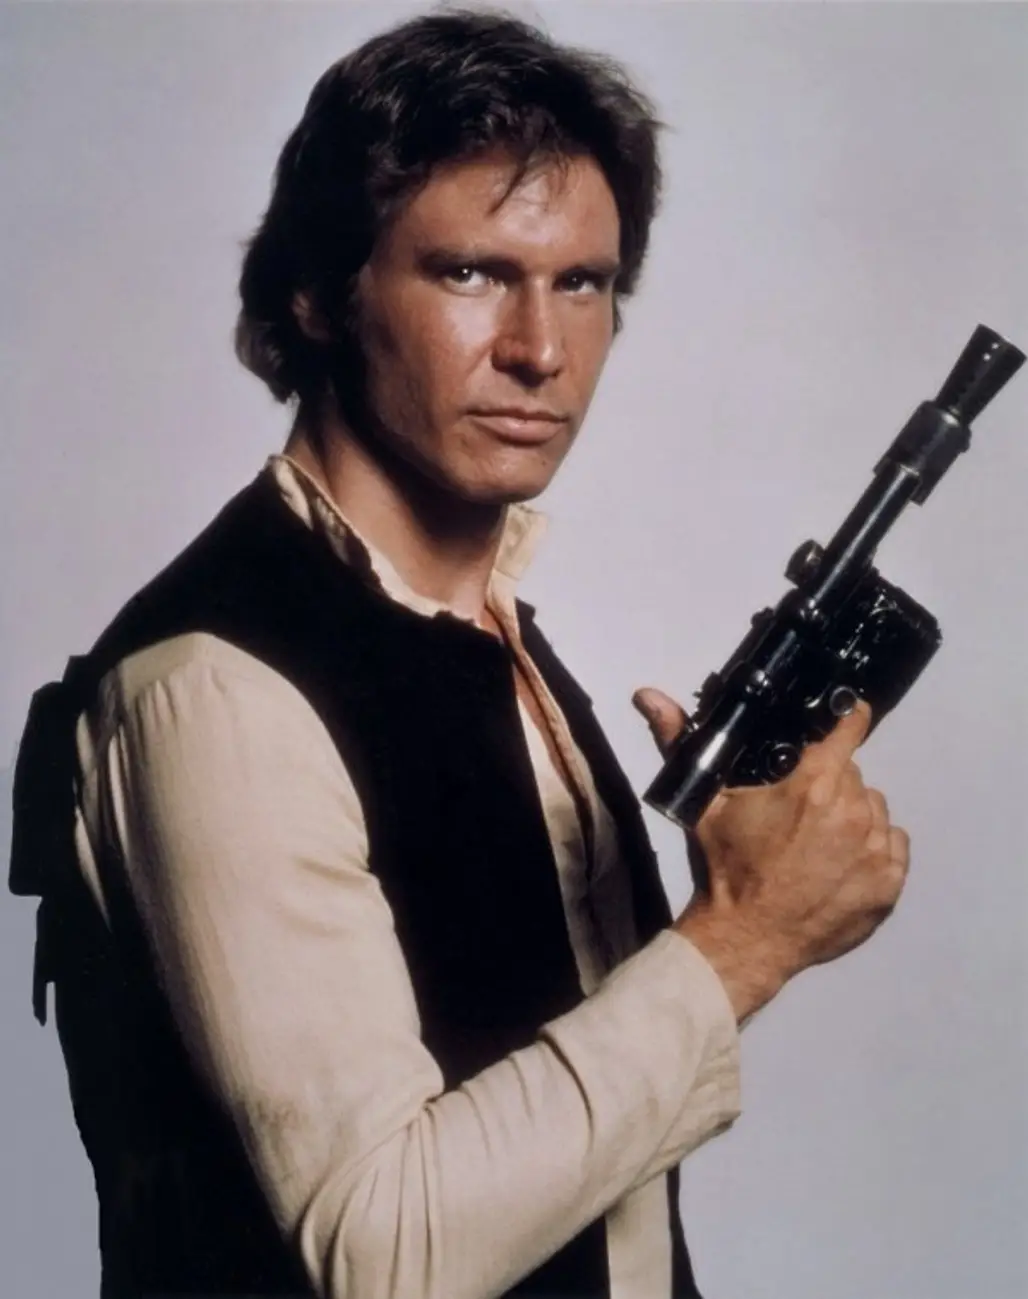 Han Solo's Day Job